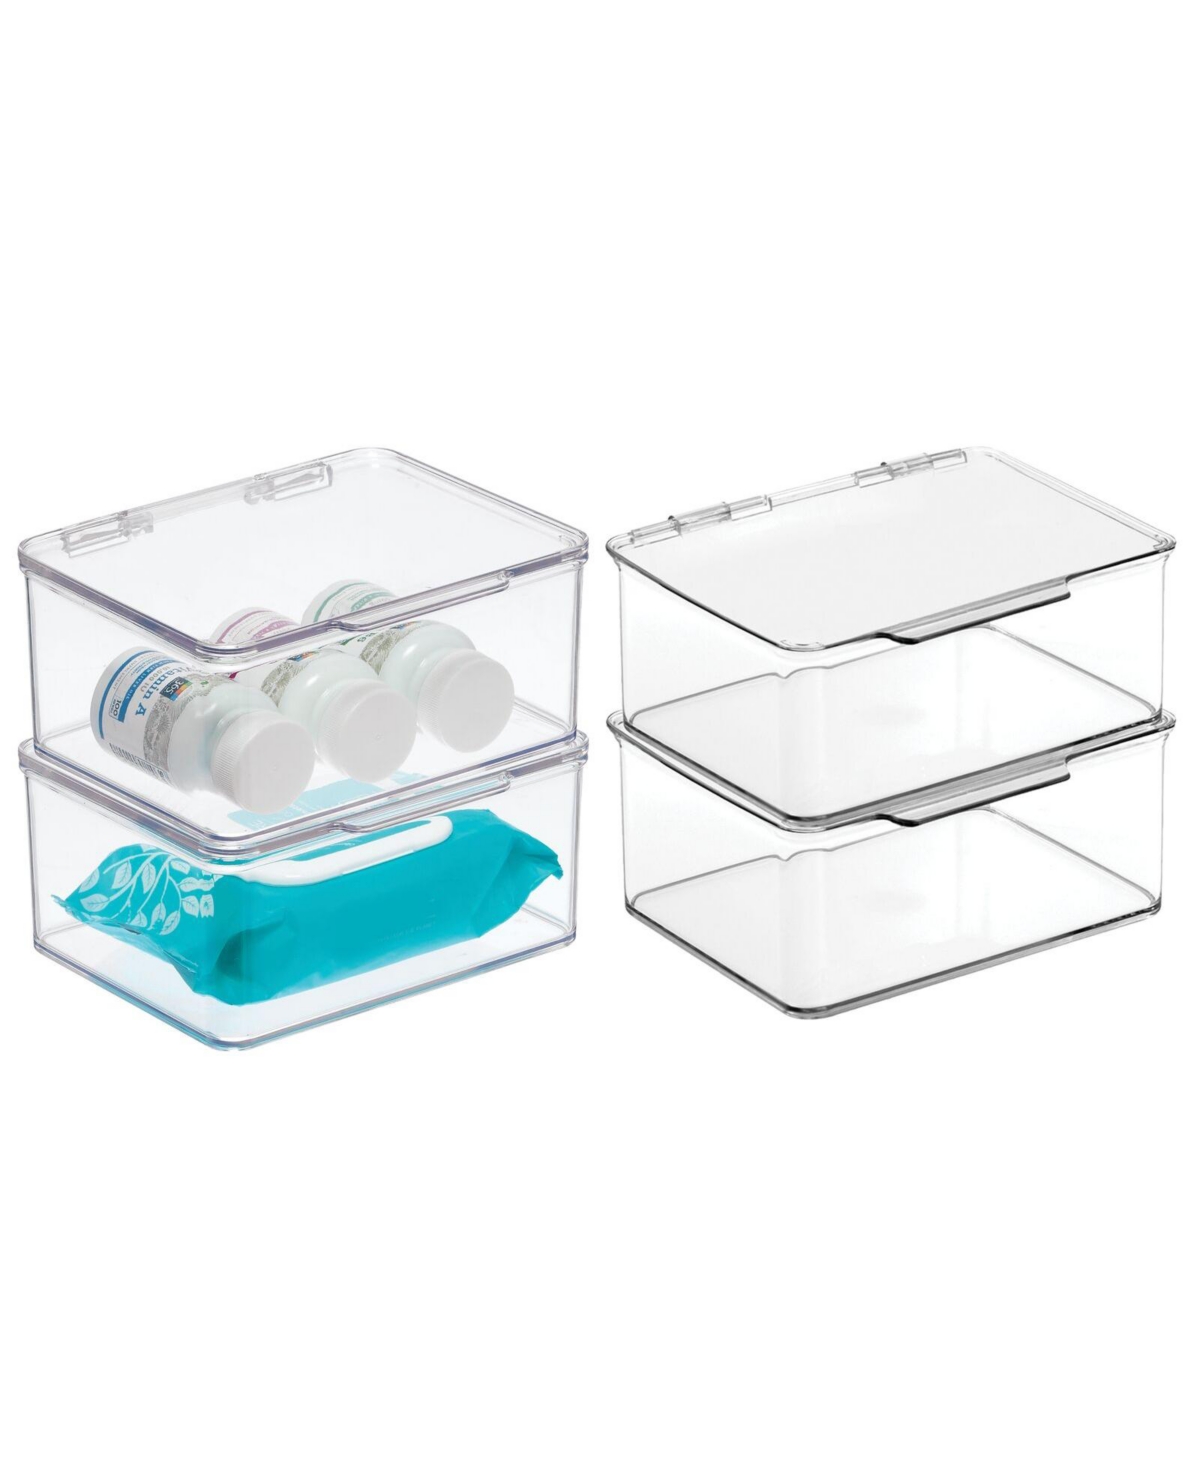 Plastic Bathroom Storage Organizer Bin Box with Hinge Lid, 4 Pack, Clear - Clear